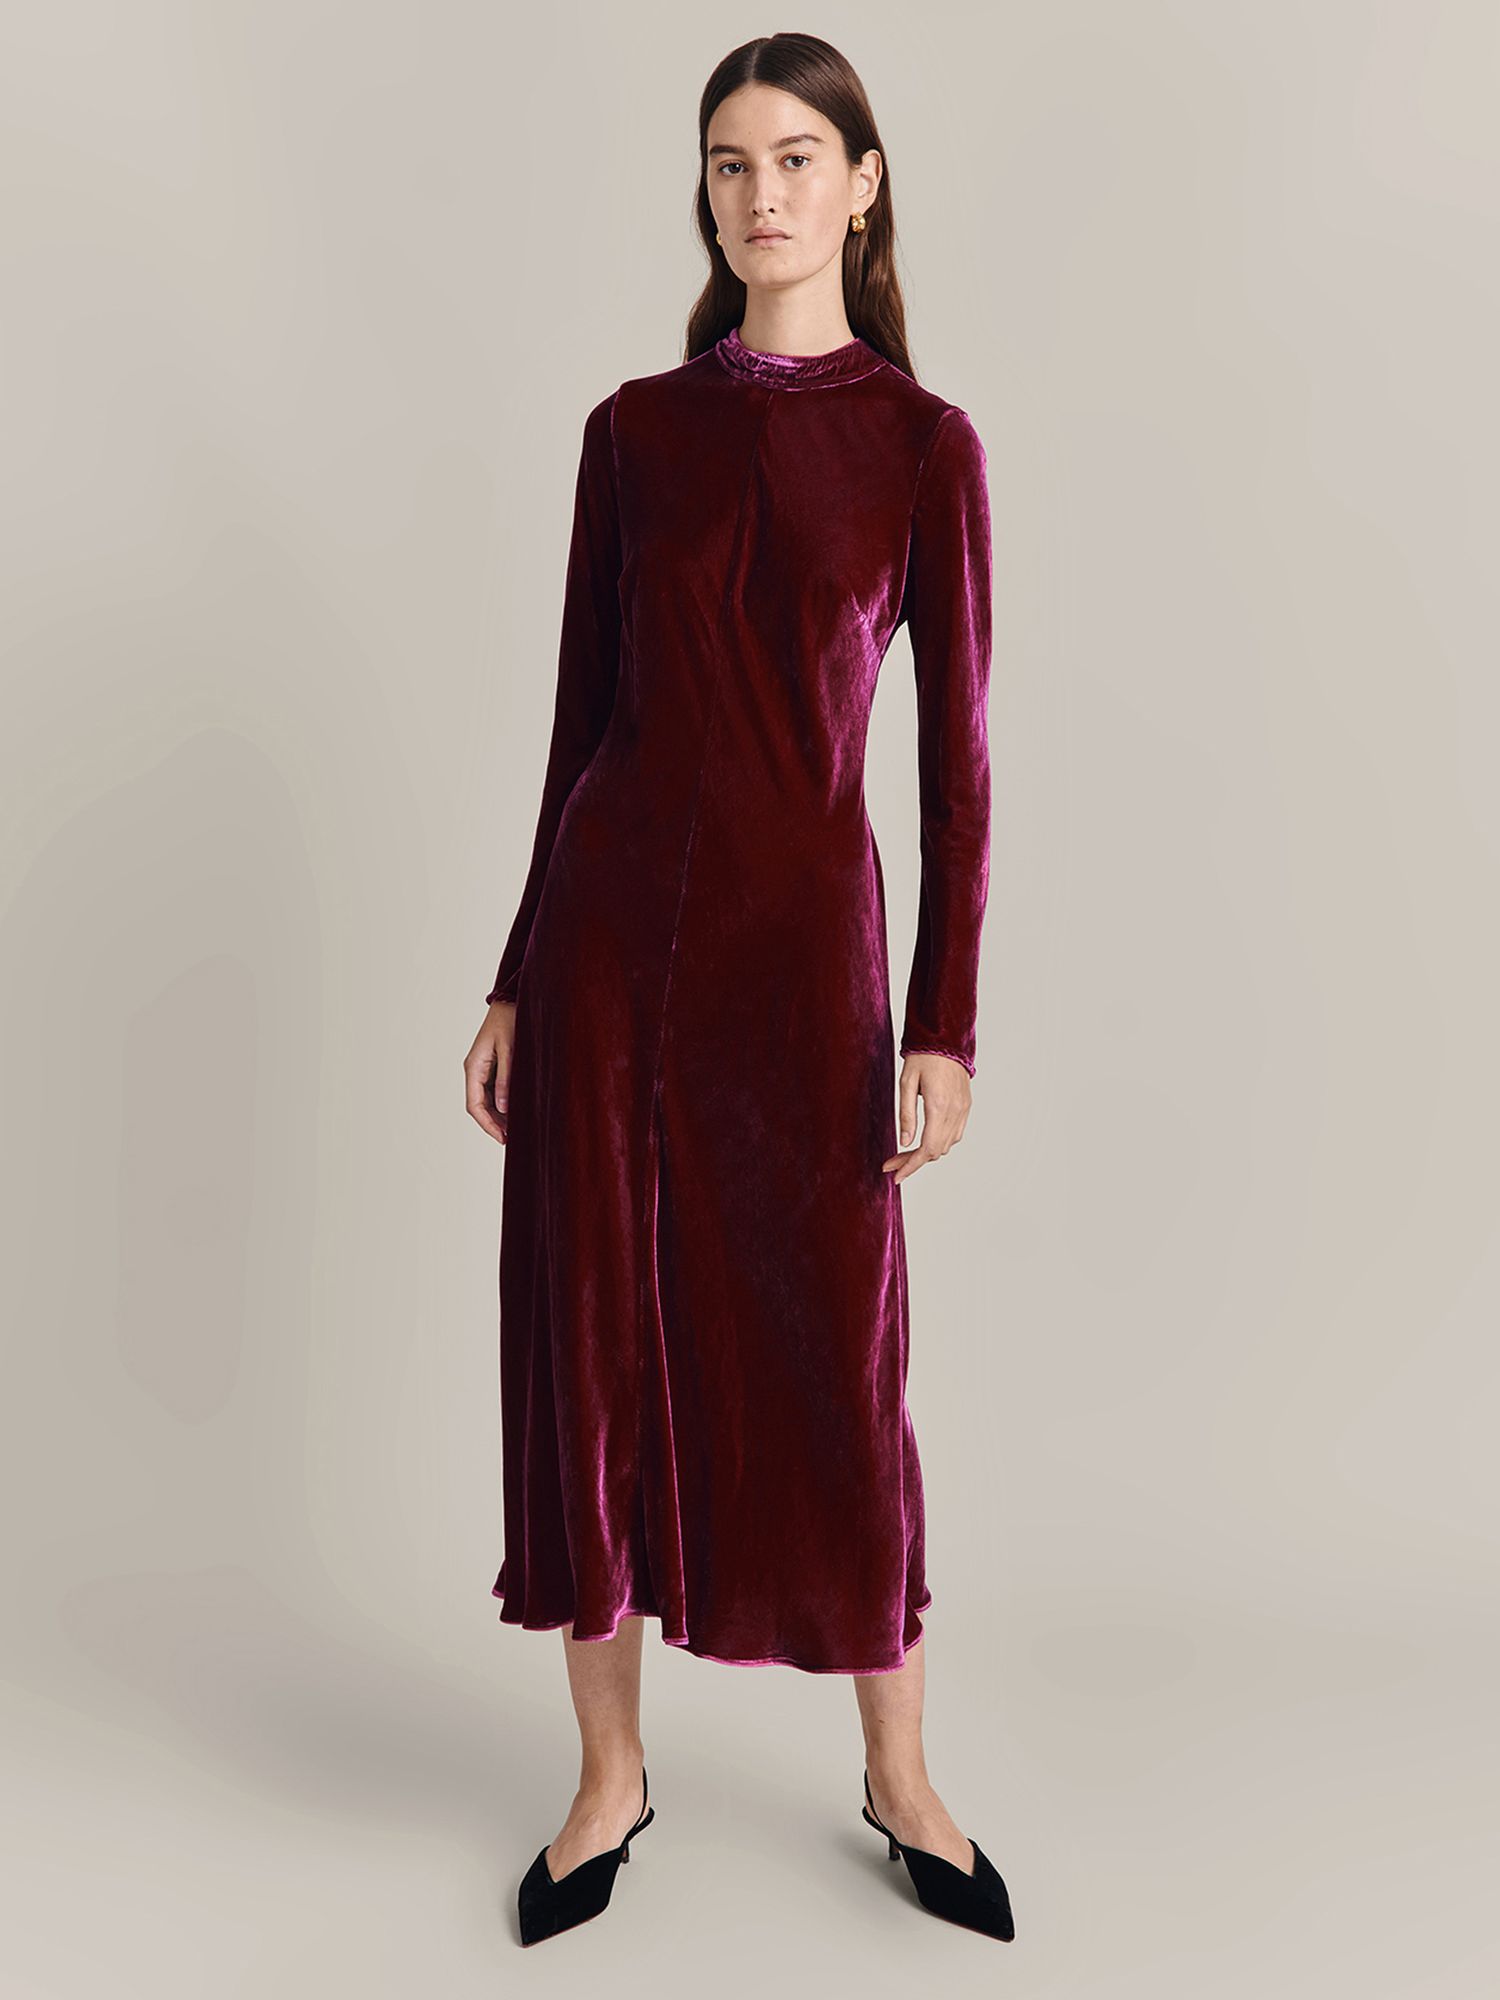 Ghost Selena Velvet Midi Dress, Magenta at John Lewis & Partners